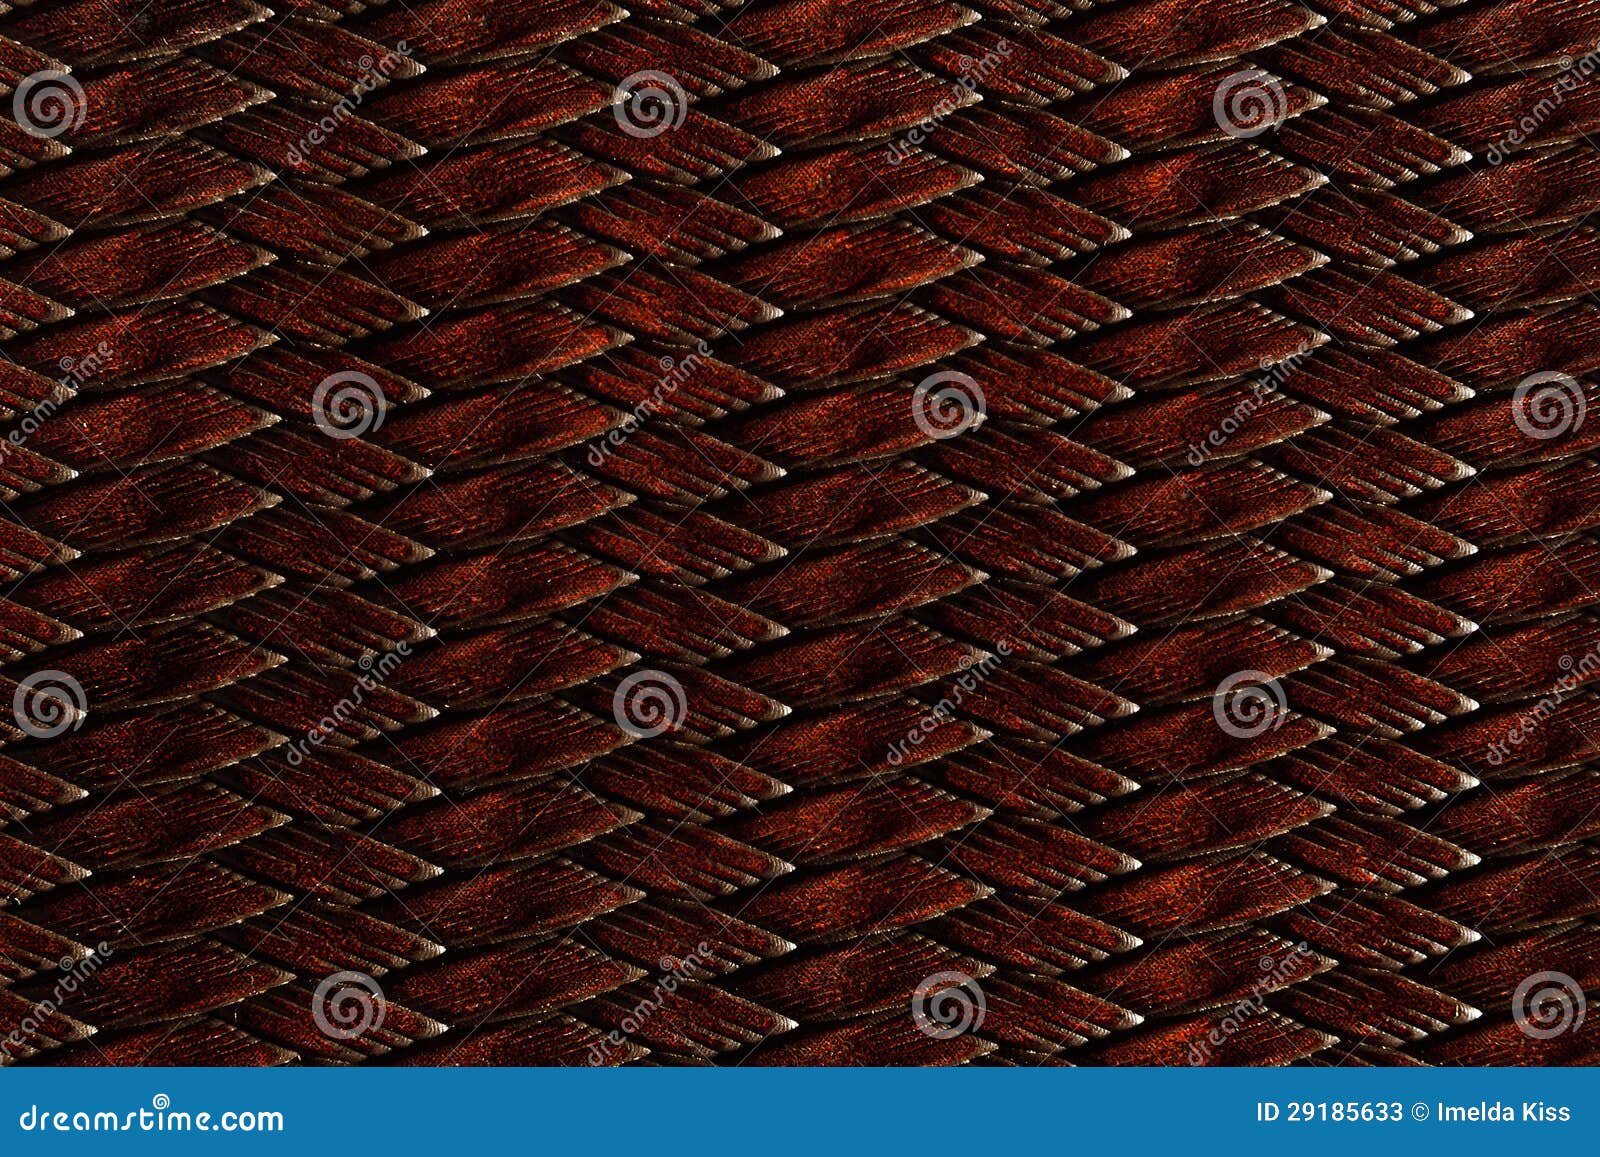 Dark Brown Snakeskin Texture Stock Image - Image of modern, natural ...